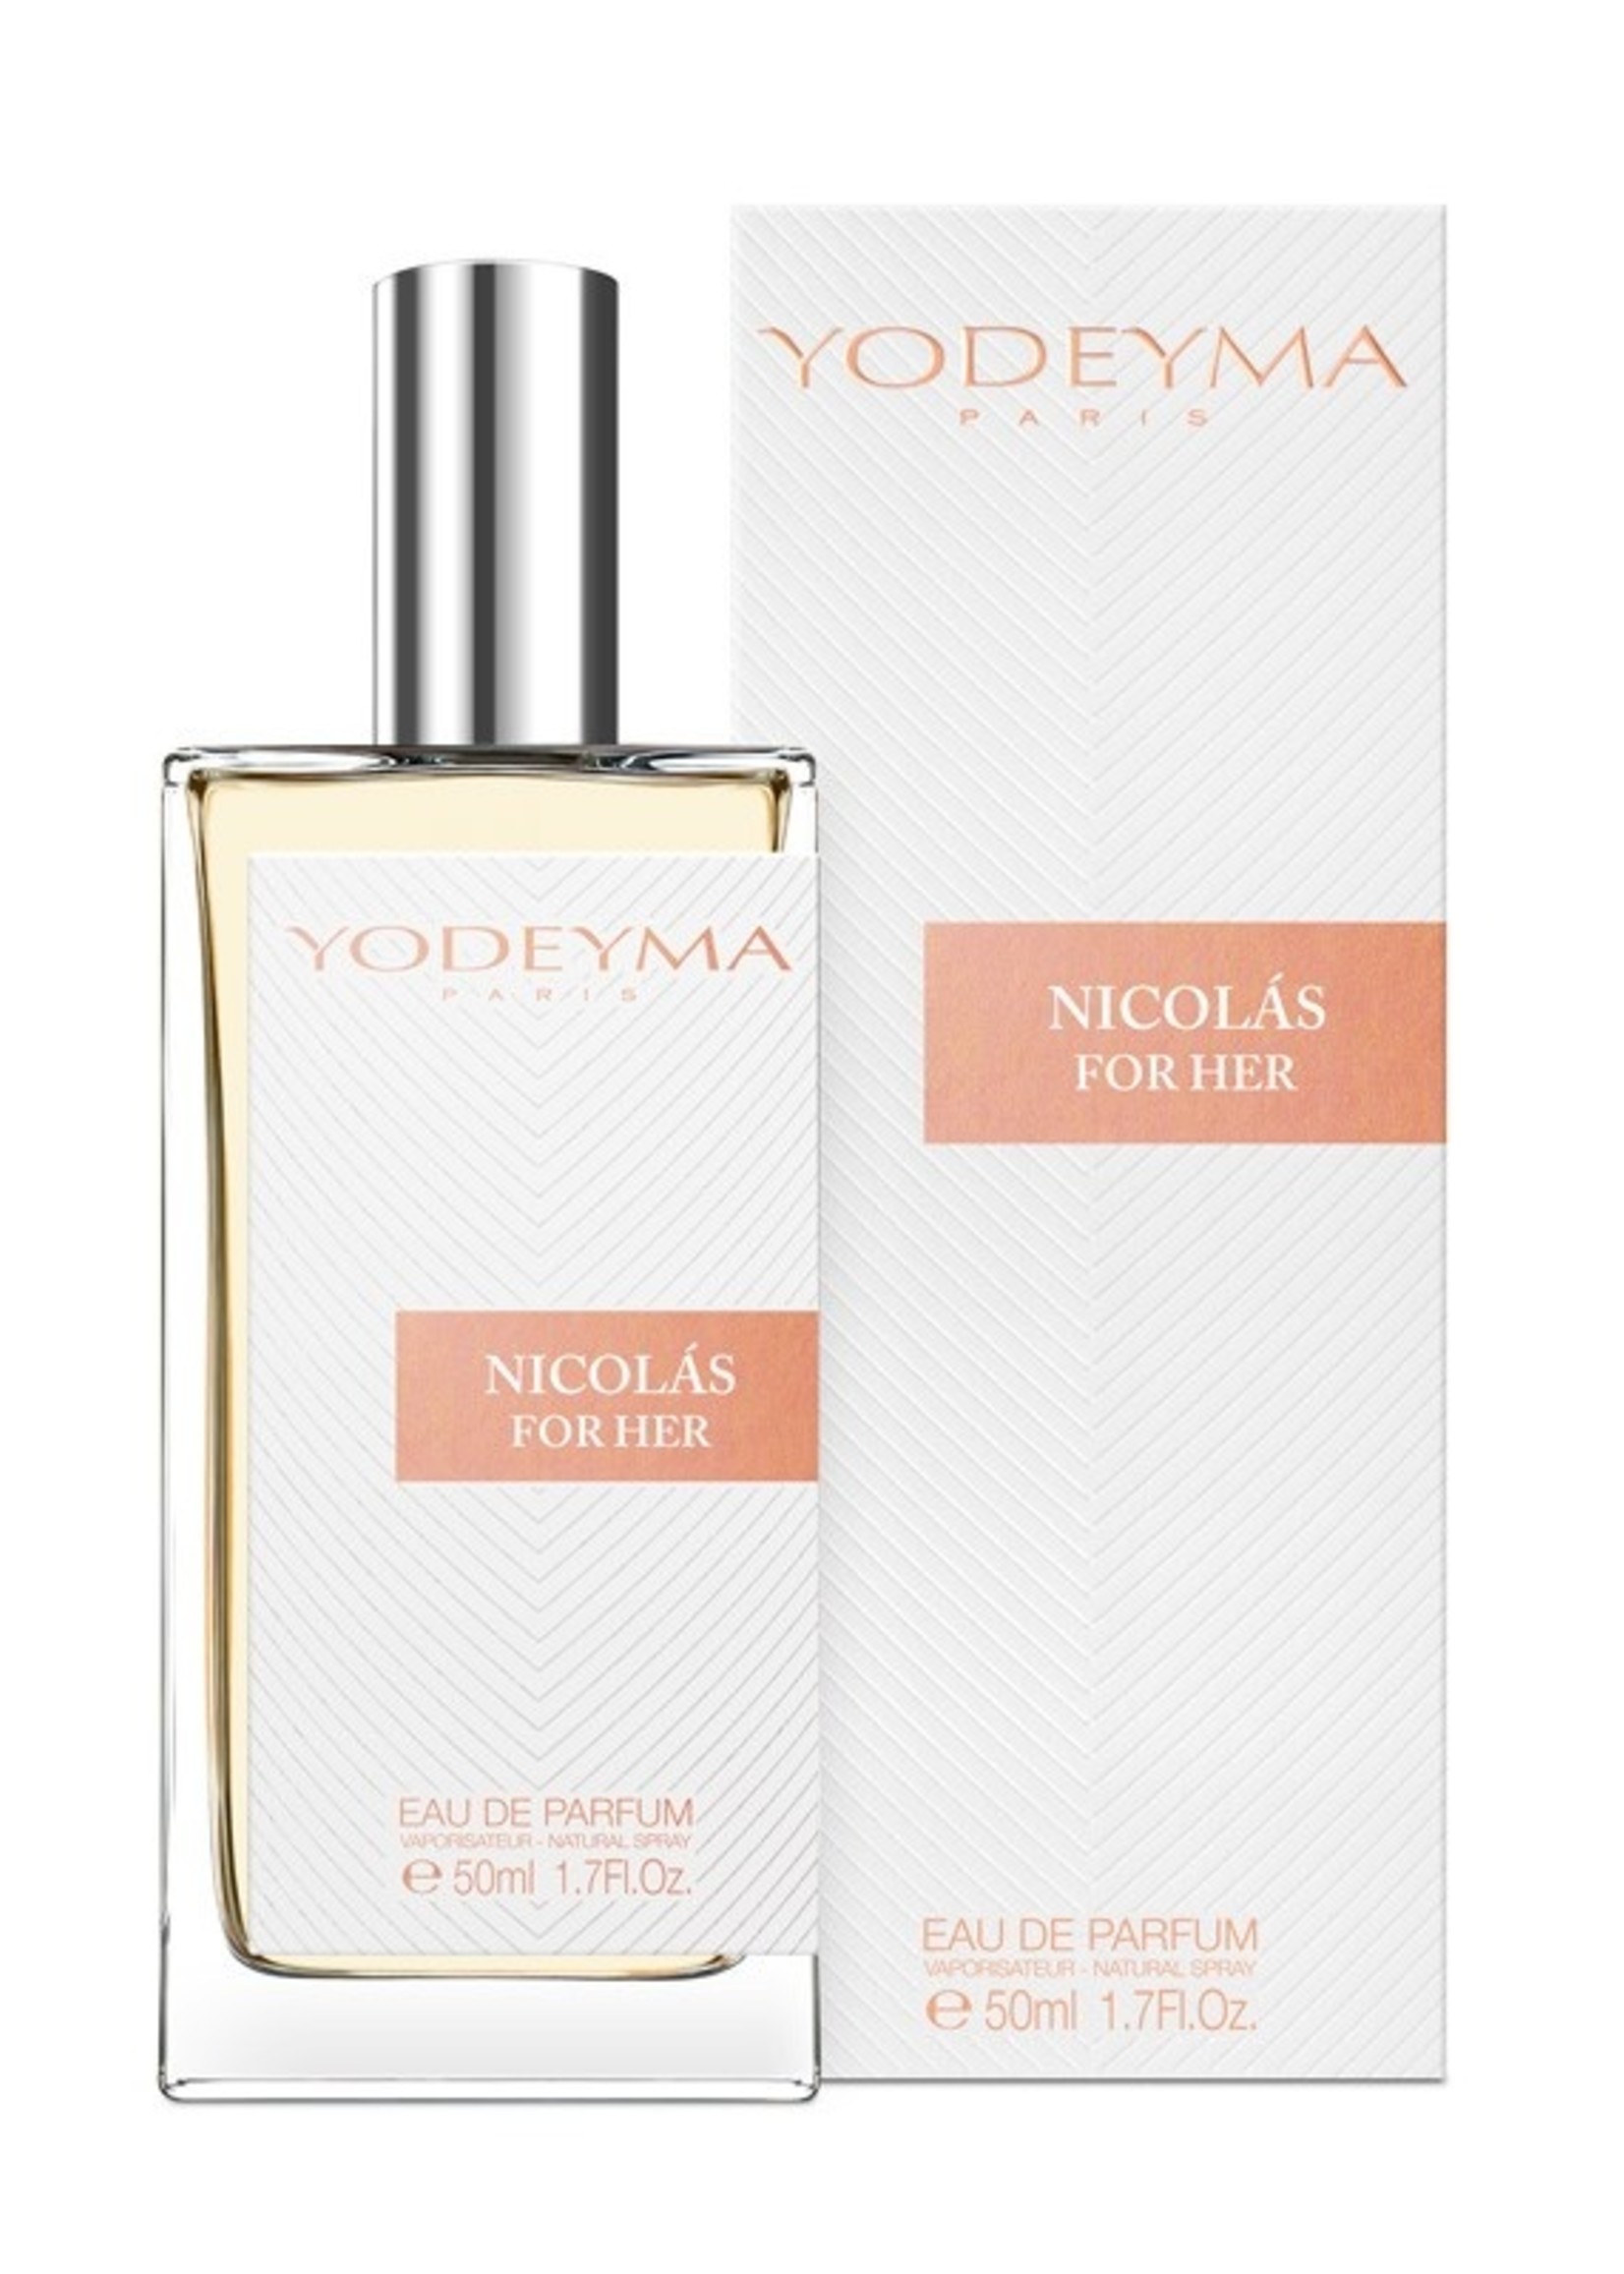 Yodeyma Parfums NICOLÁS FOR HER Eau de Parfum 50 ml.